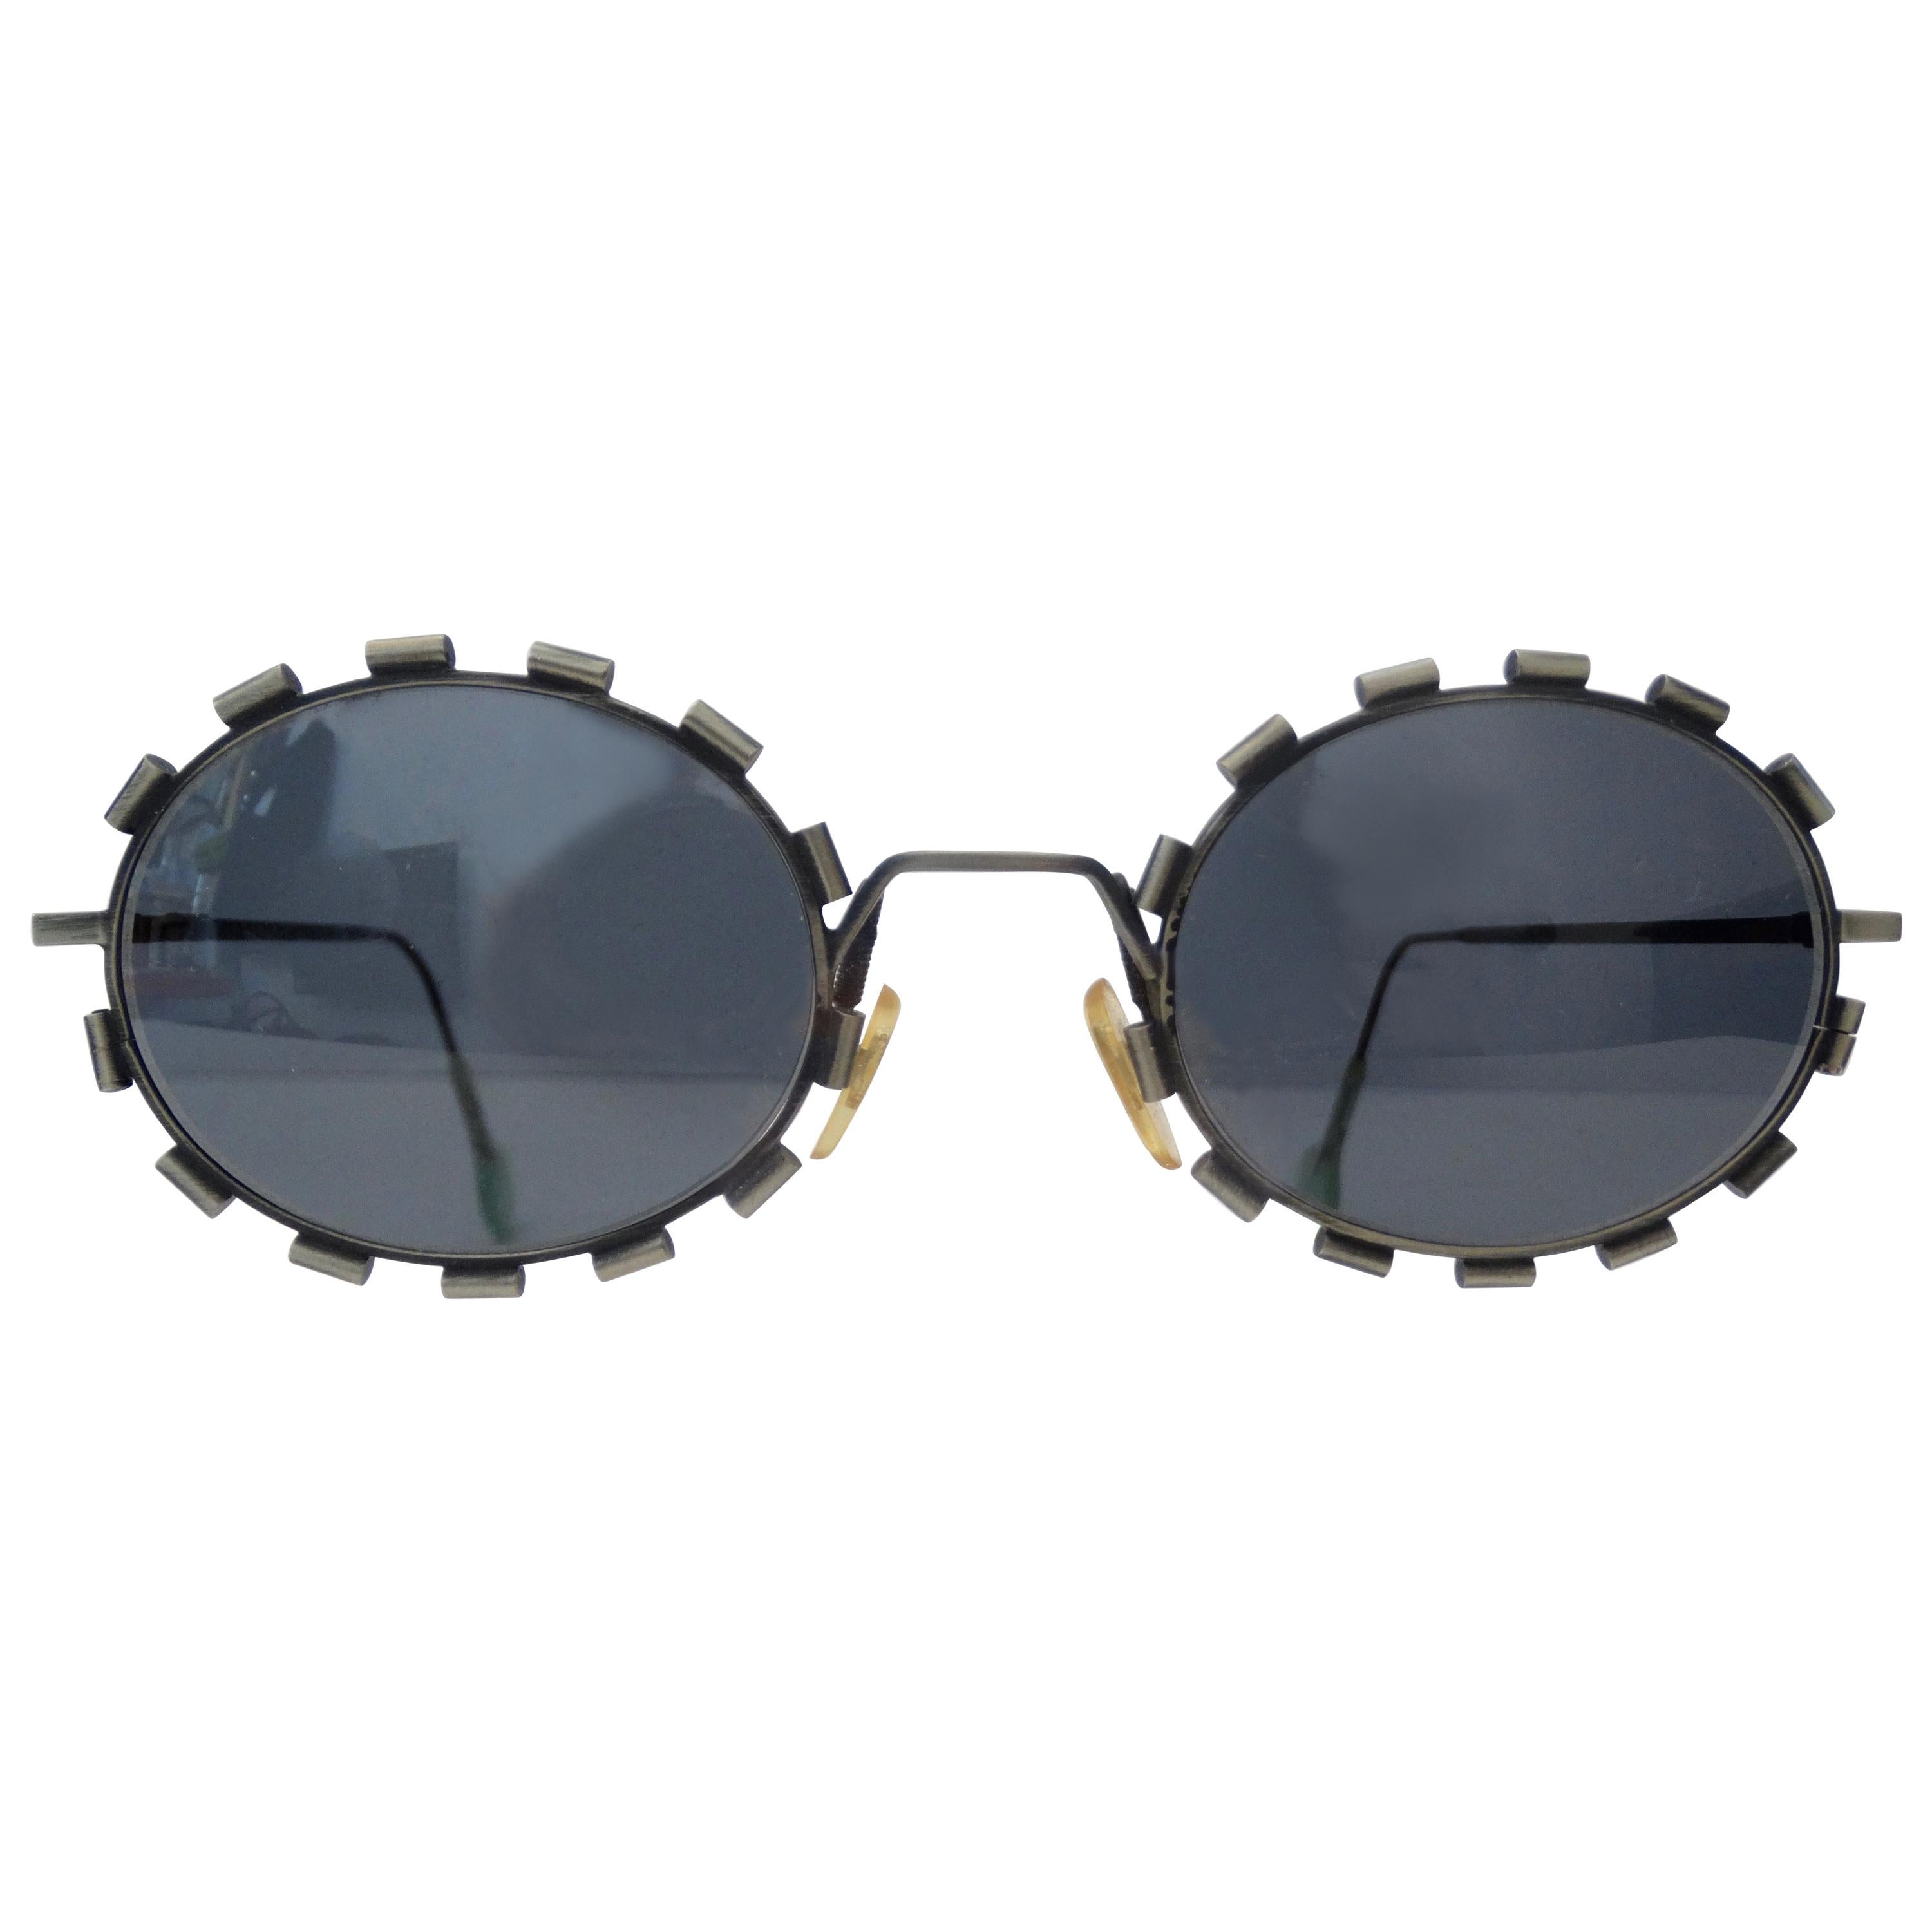 L.A. Eyeworks 1990s Bondo Sunglasses